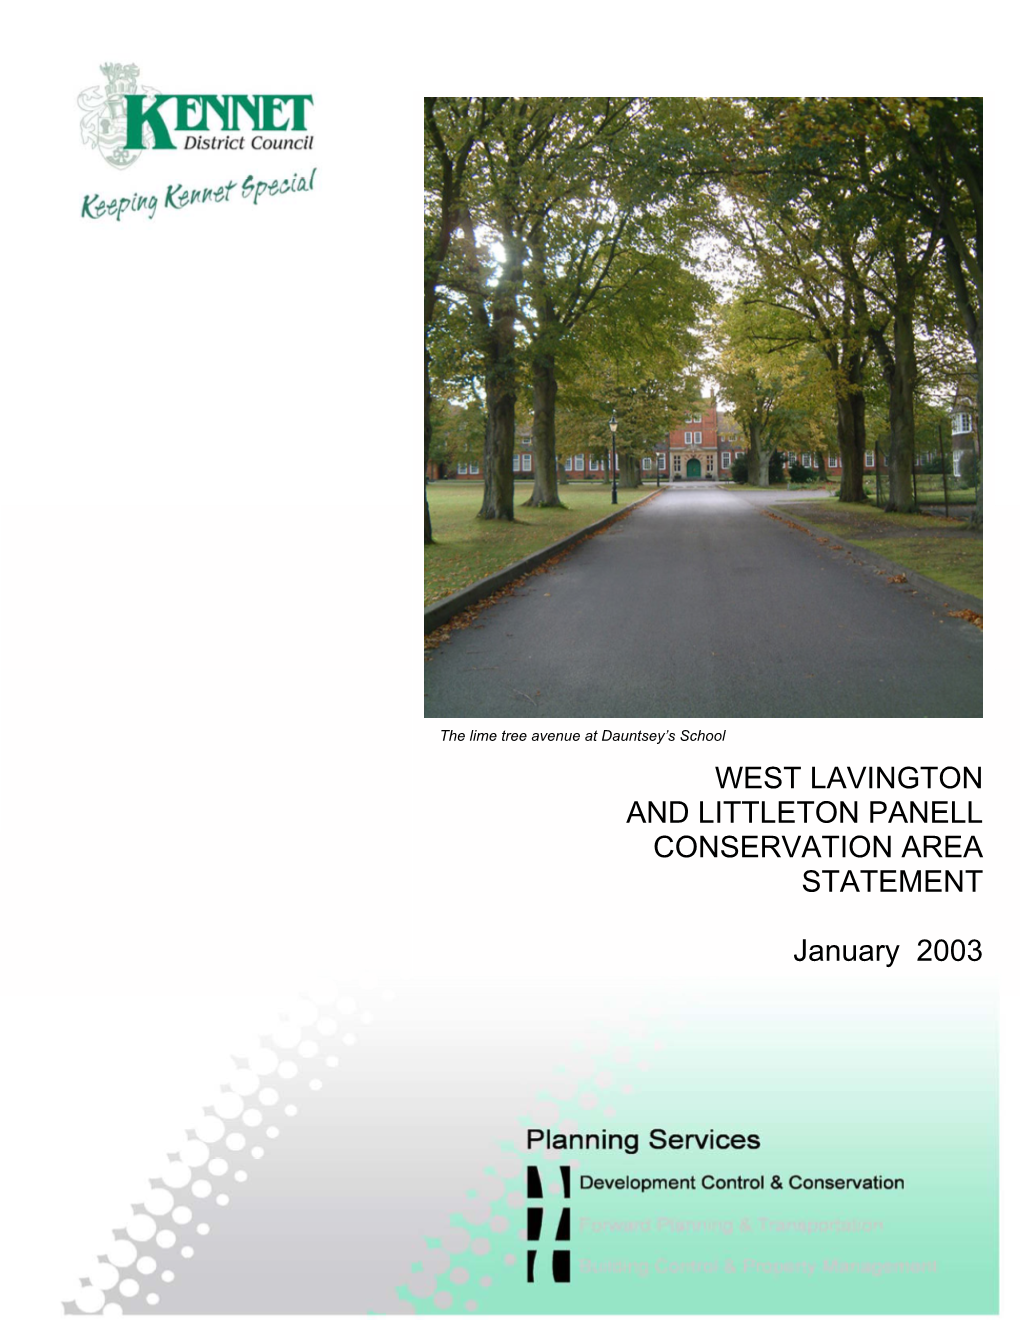 West Lavington and Littleton Panell Conservation Area